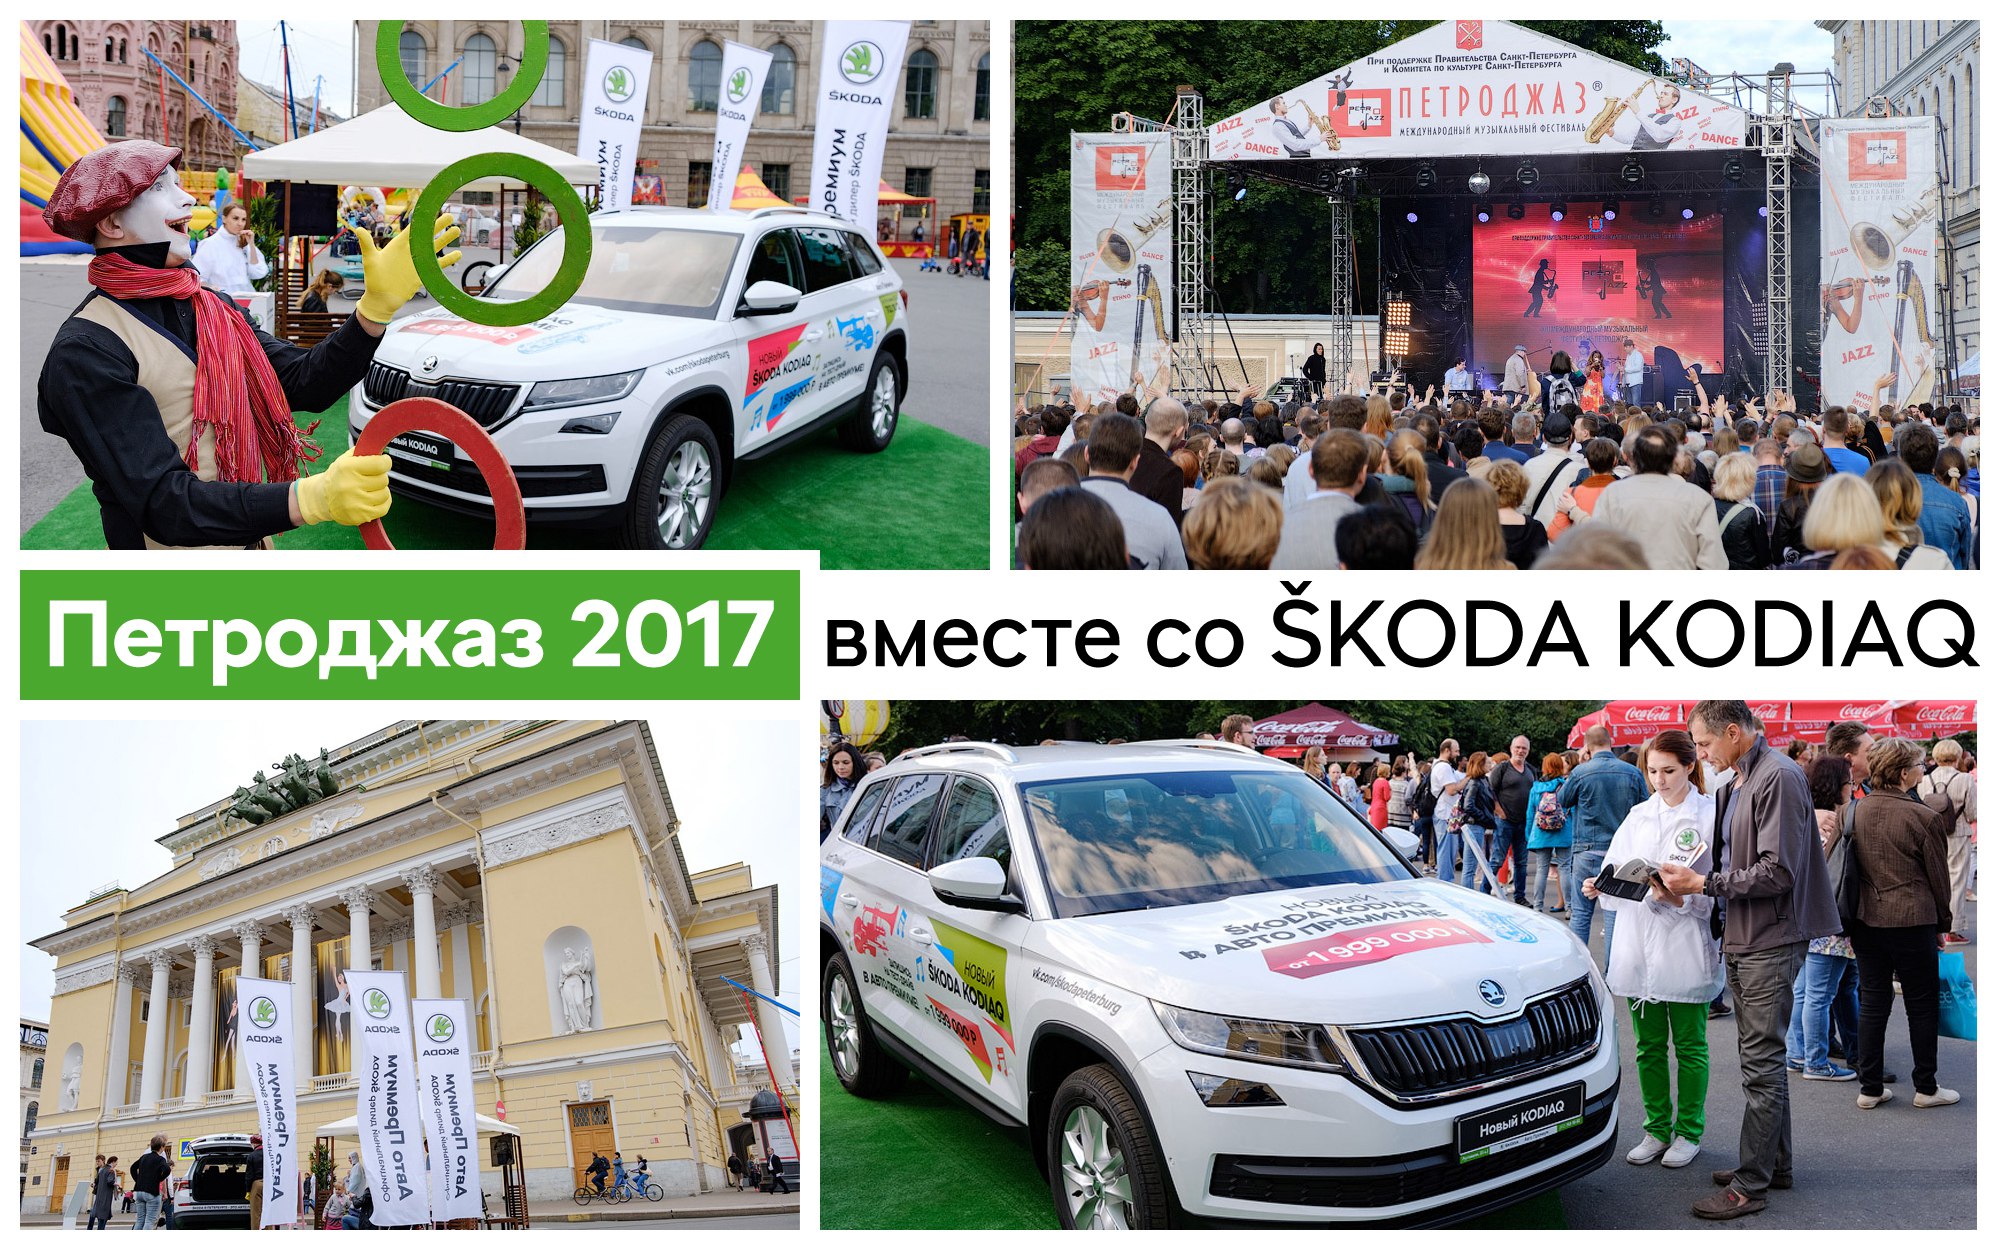 ŠKODA KODIAQ – хэдлайнер фестиваля «Петроджаз 2017»